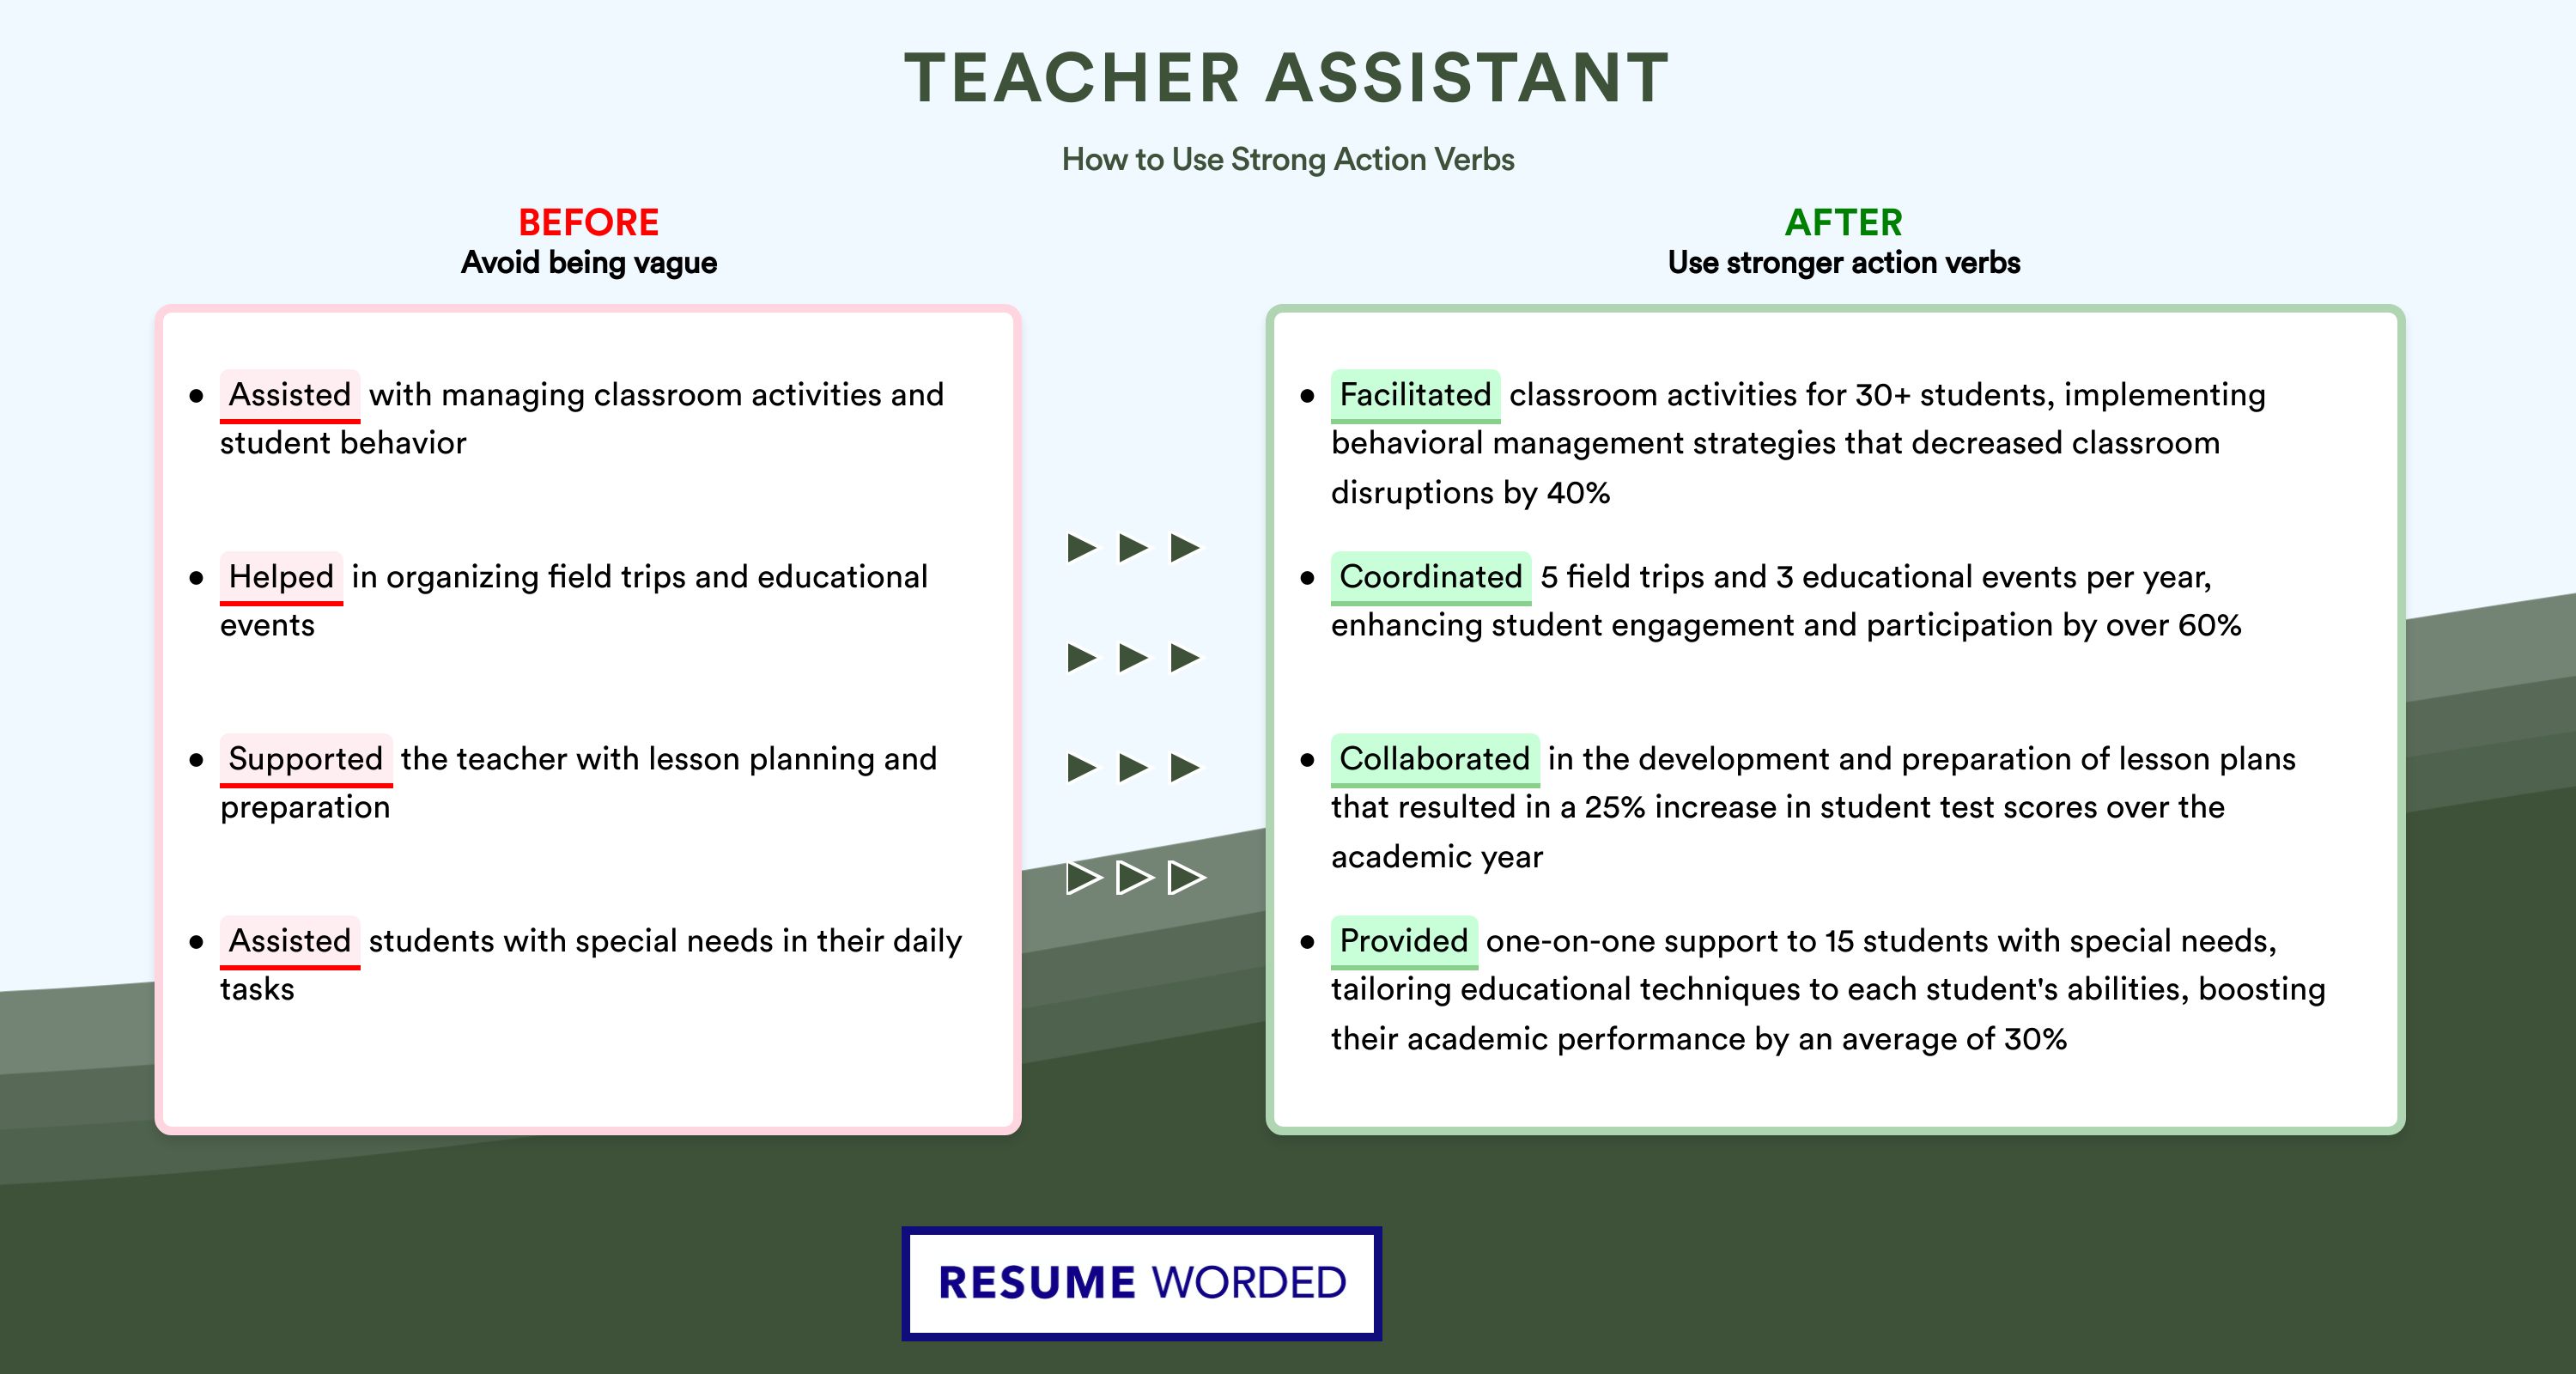 Action Verbs for Teacher Assistant